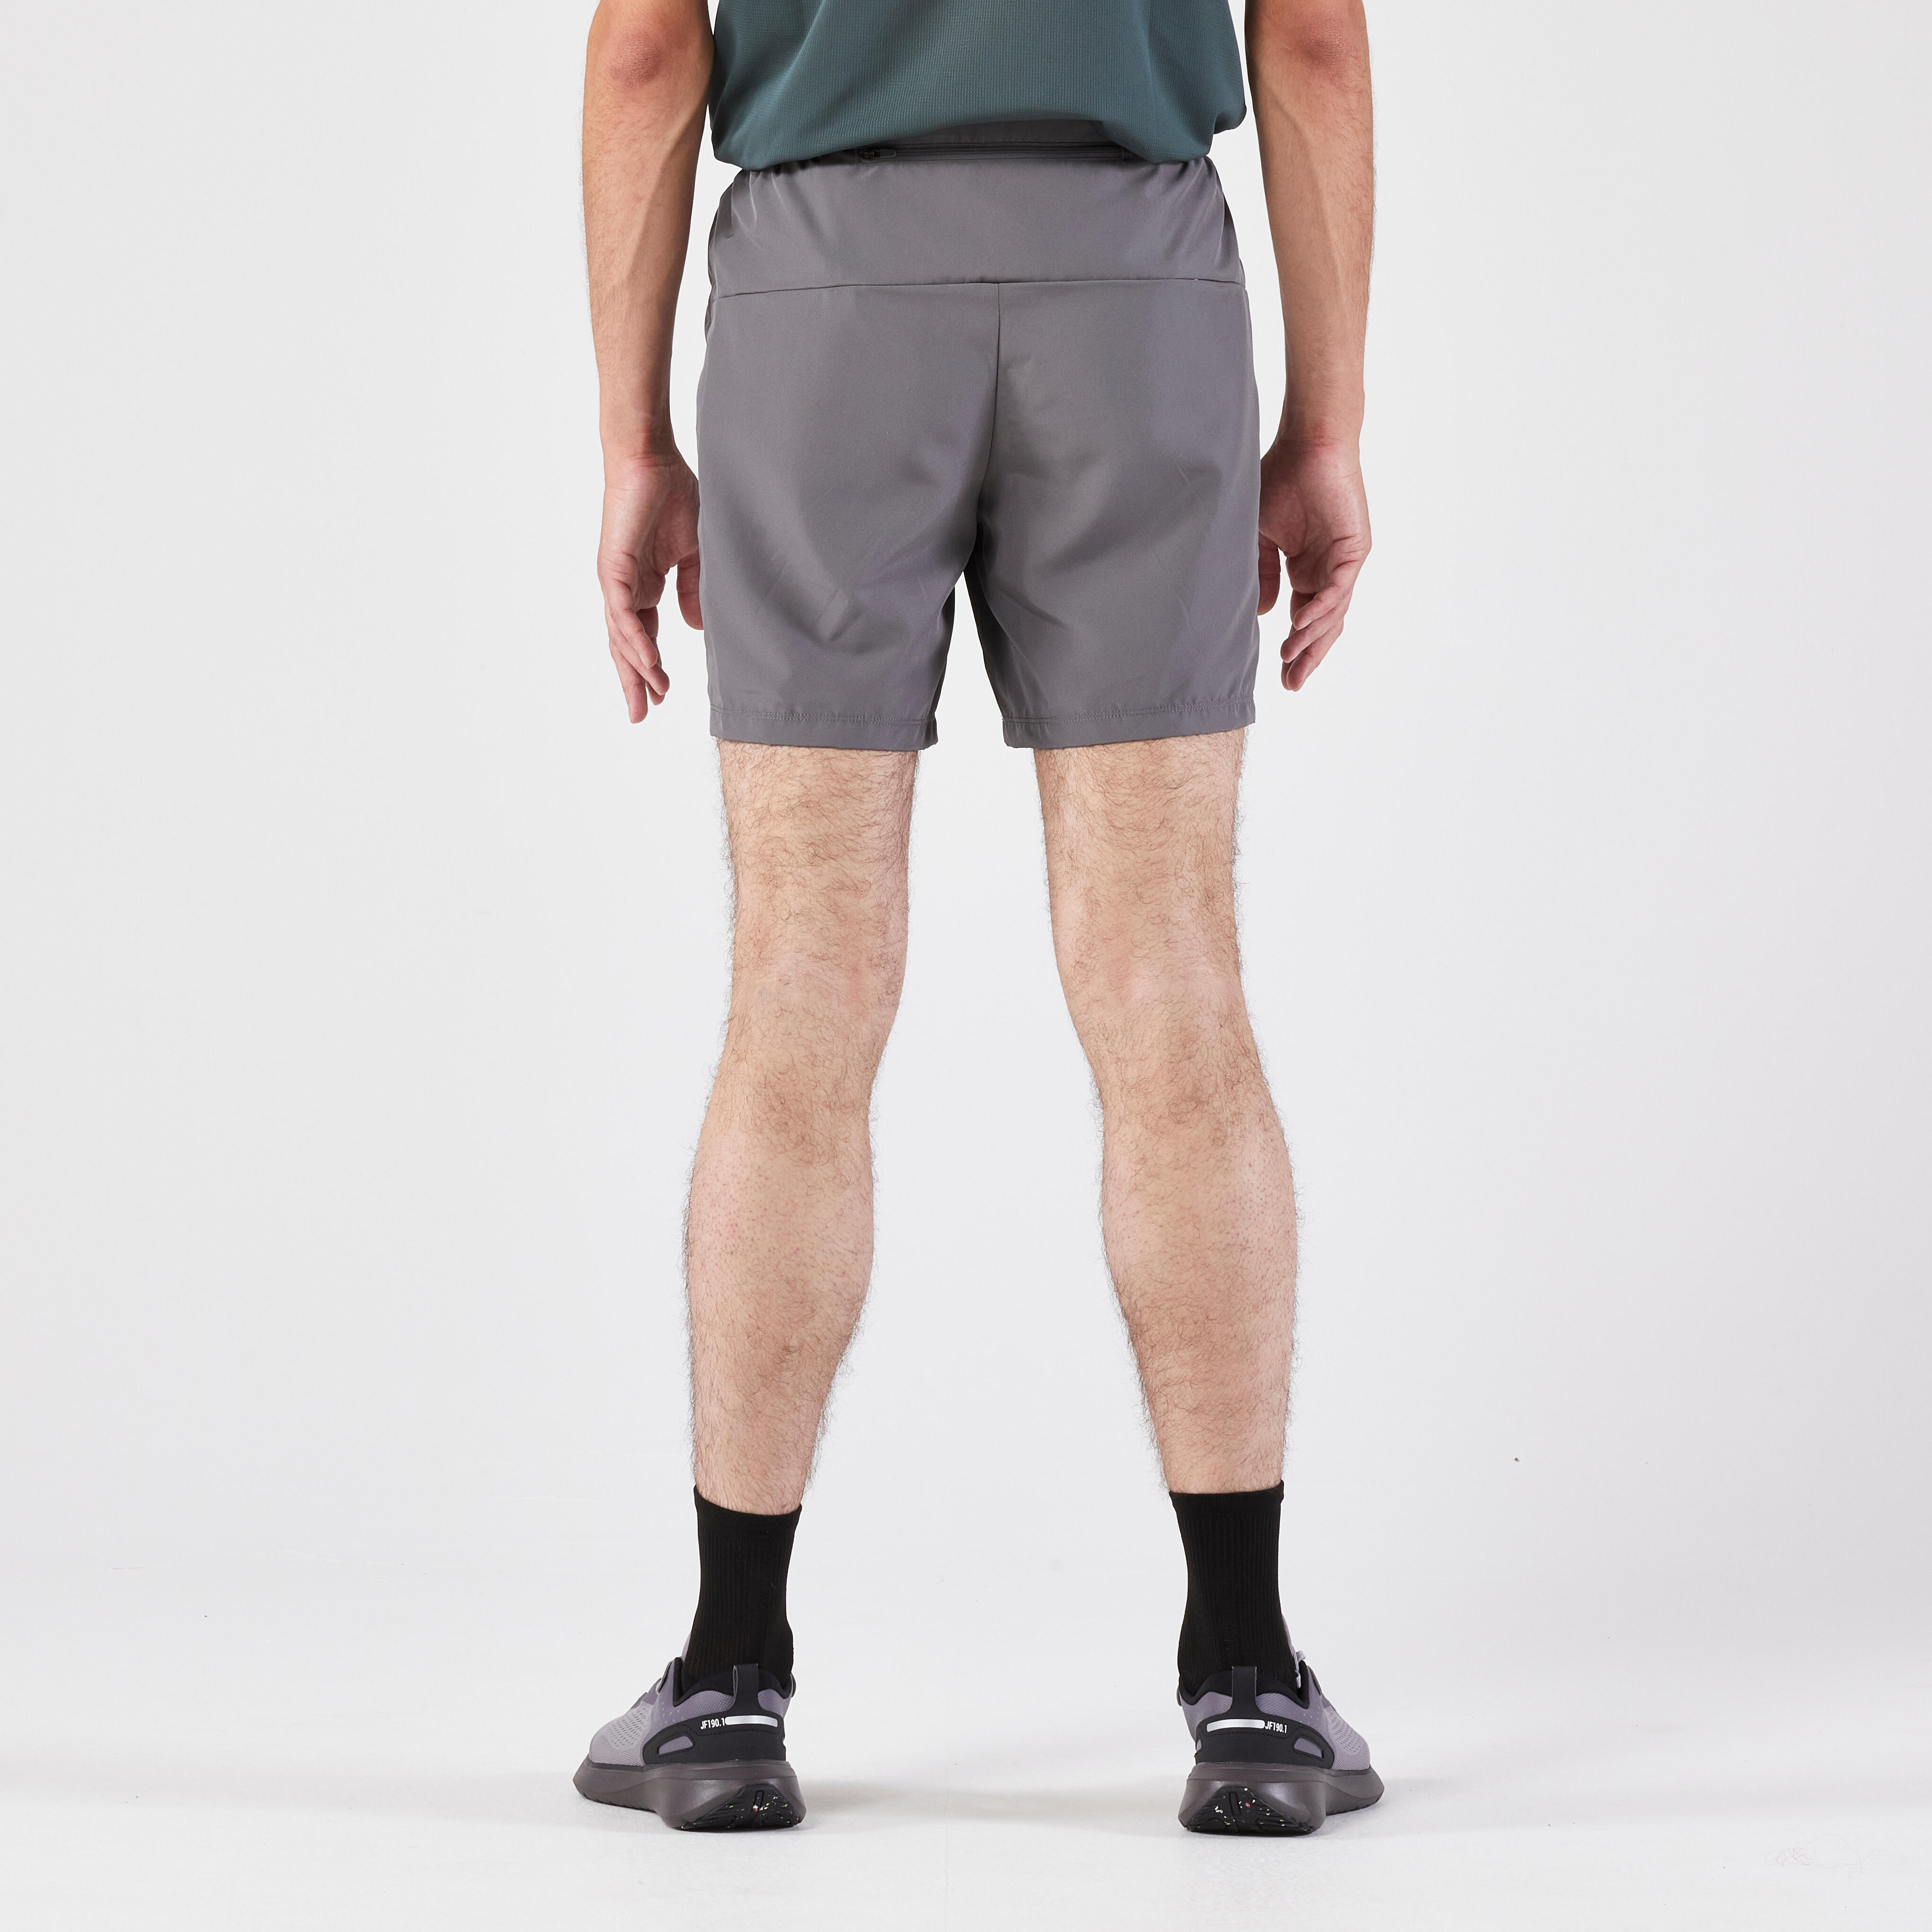 Men’s 2-in-1 Fitness Shorts - 500